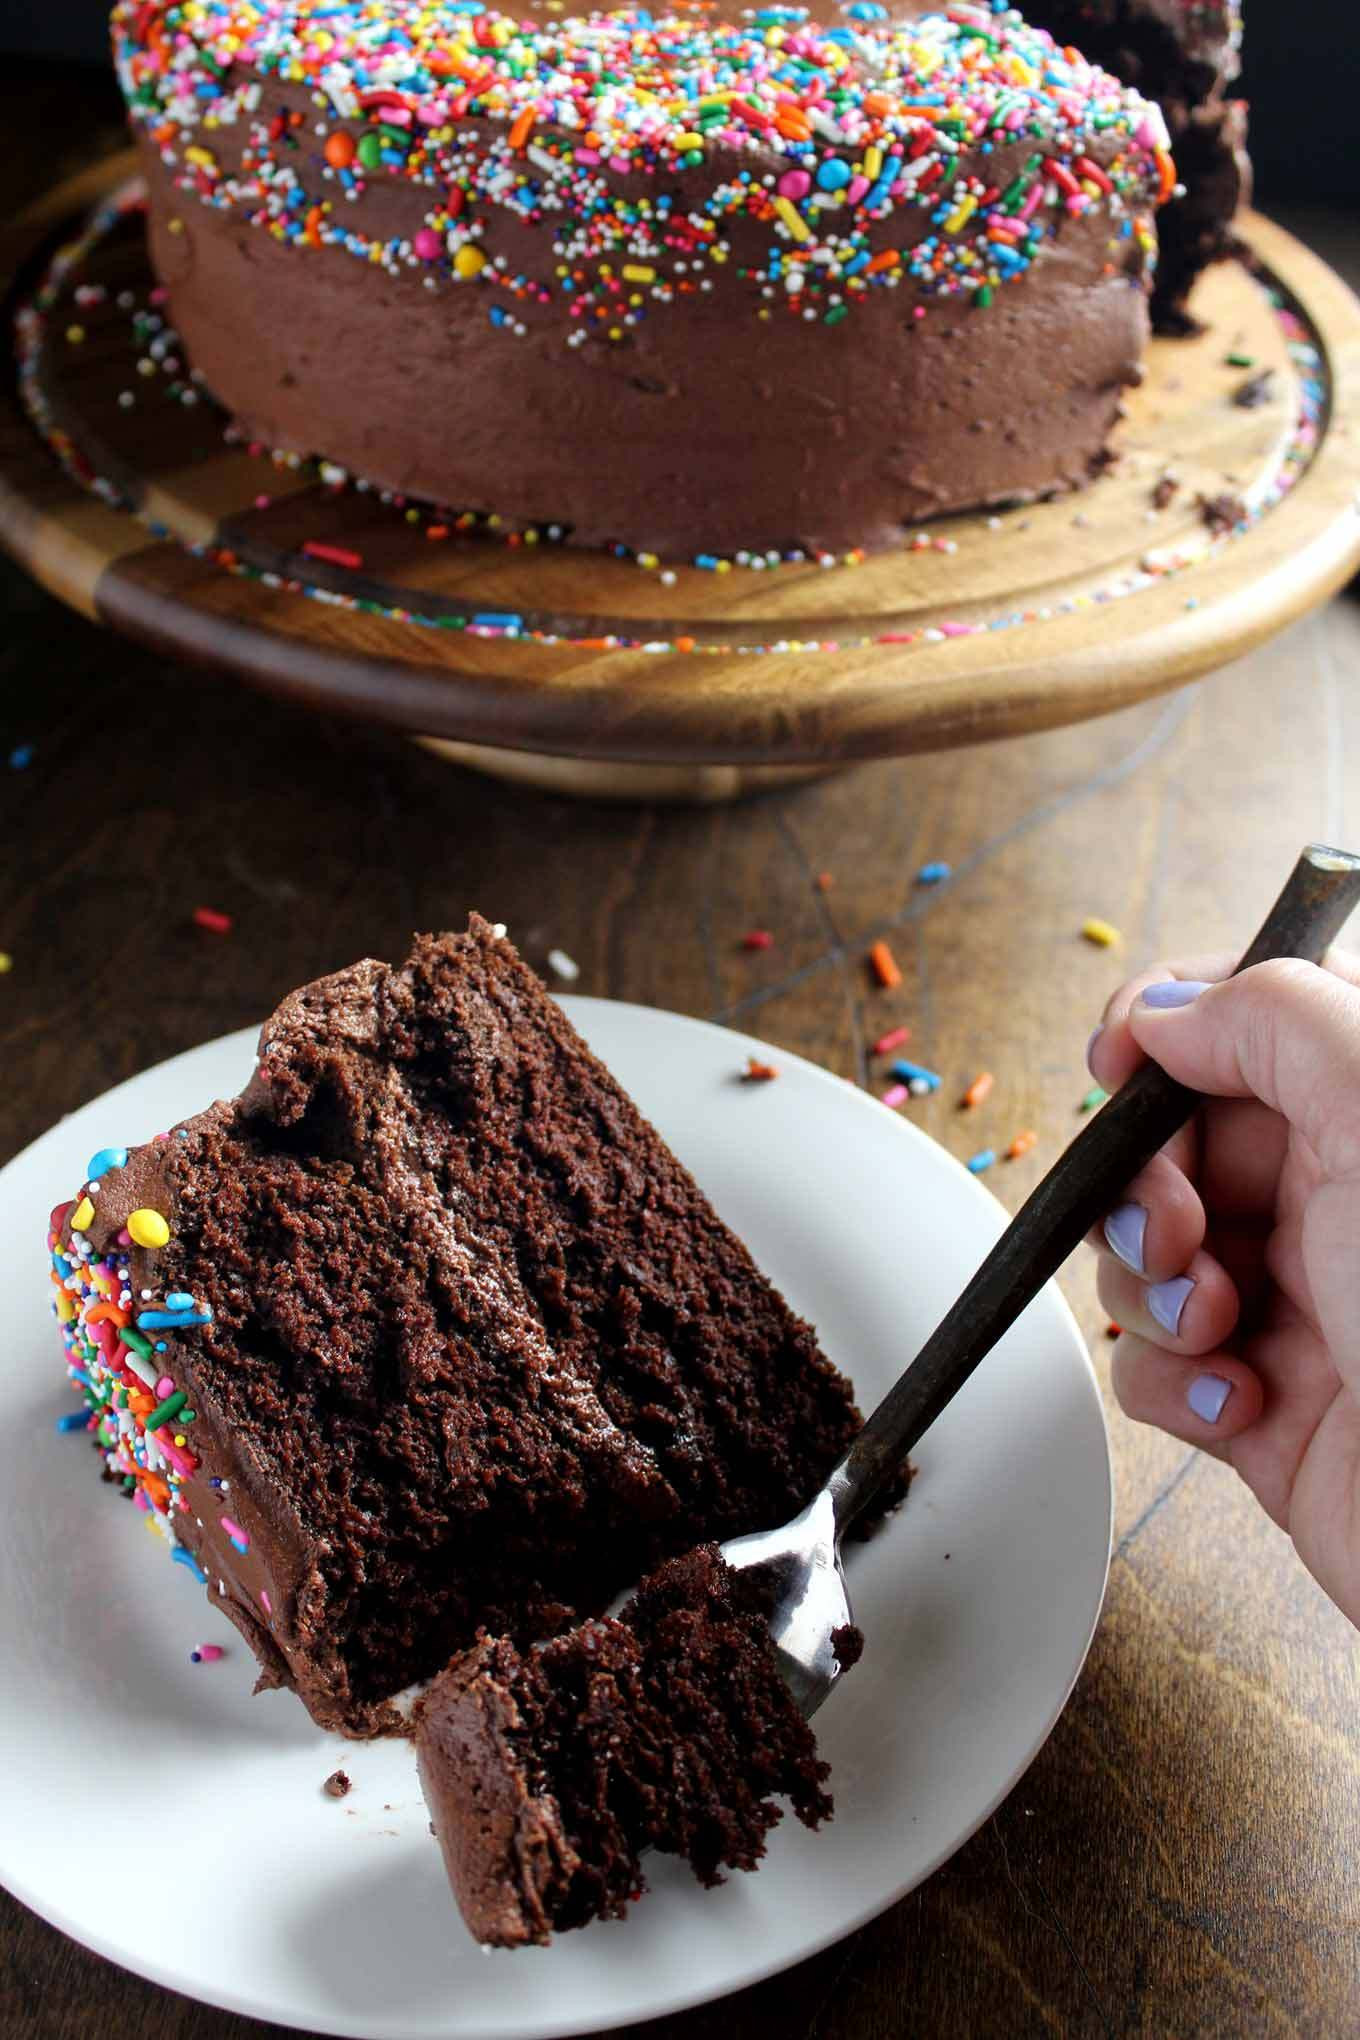 Best ideas about Chocolate Birthday Cake
. Save or Pin Classic Chocolate Birthday Cake Now.